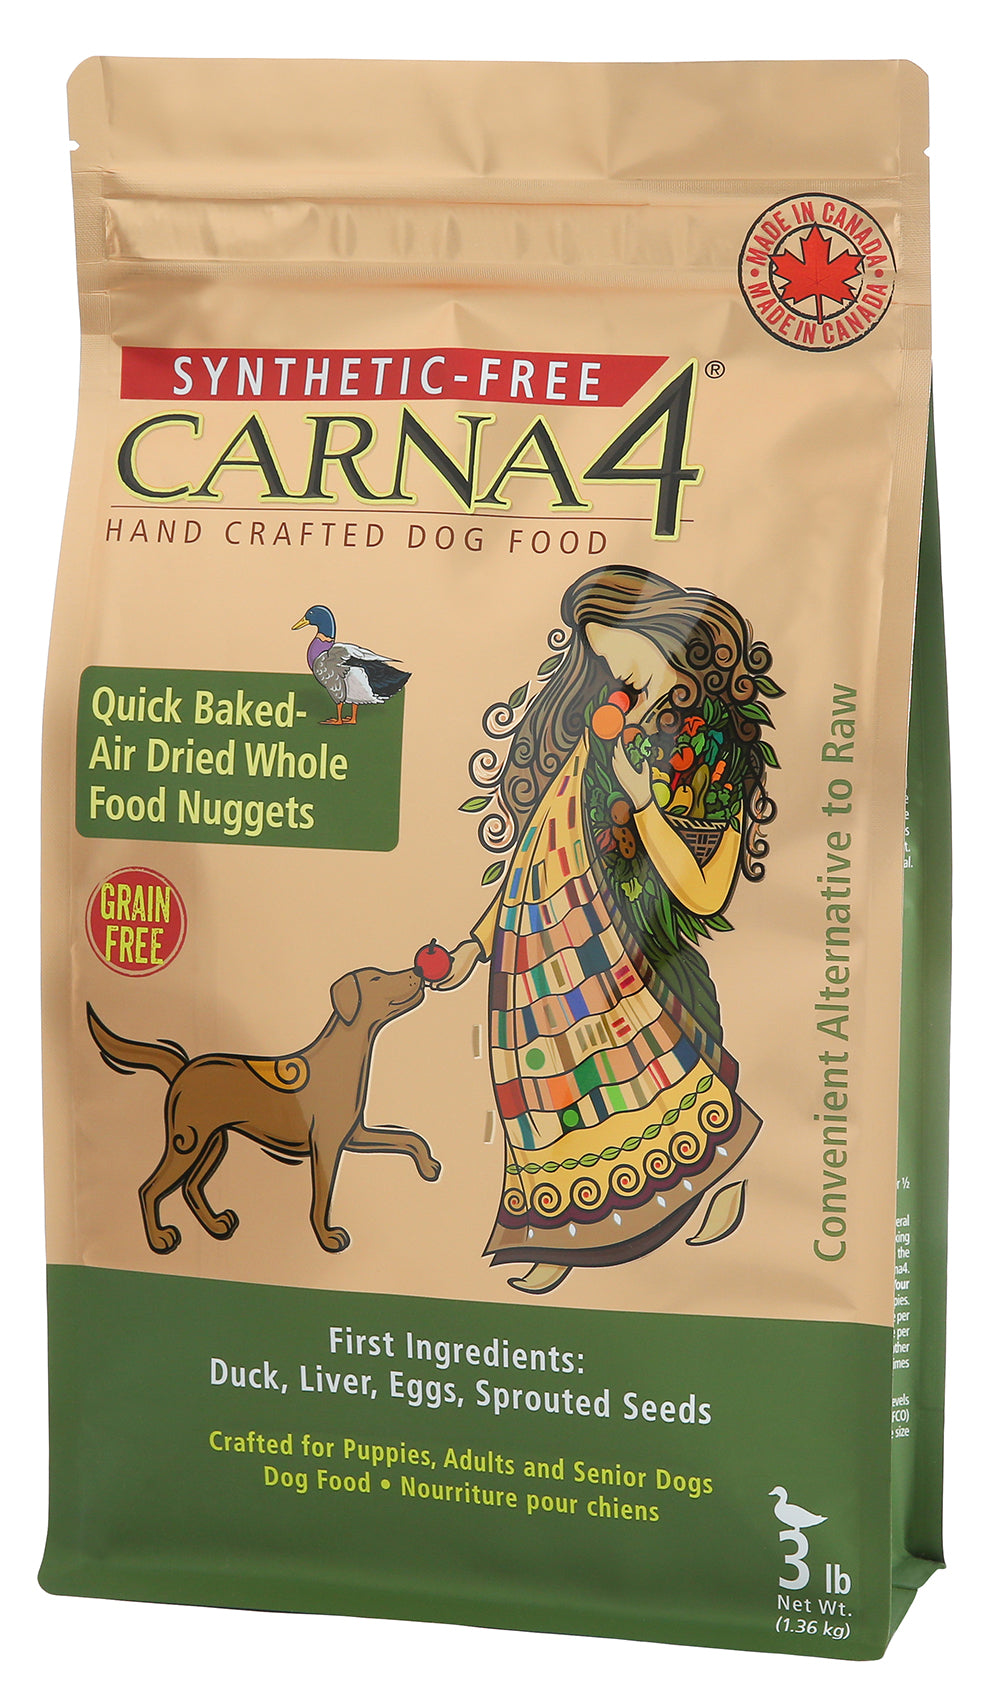 Carna4® Dog Food – Grain-free Duck